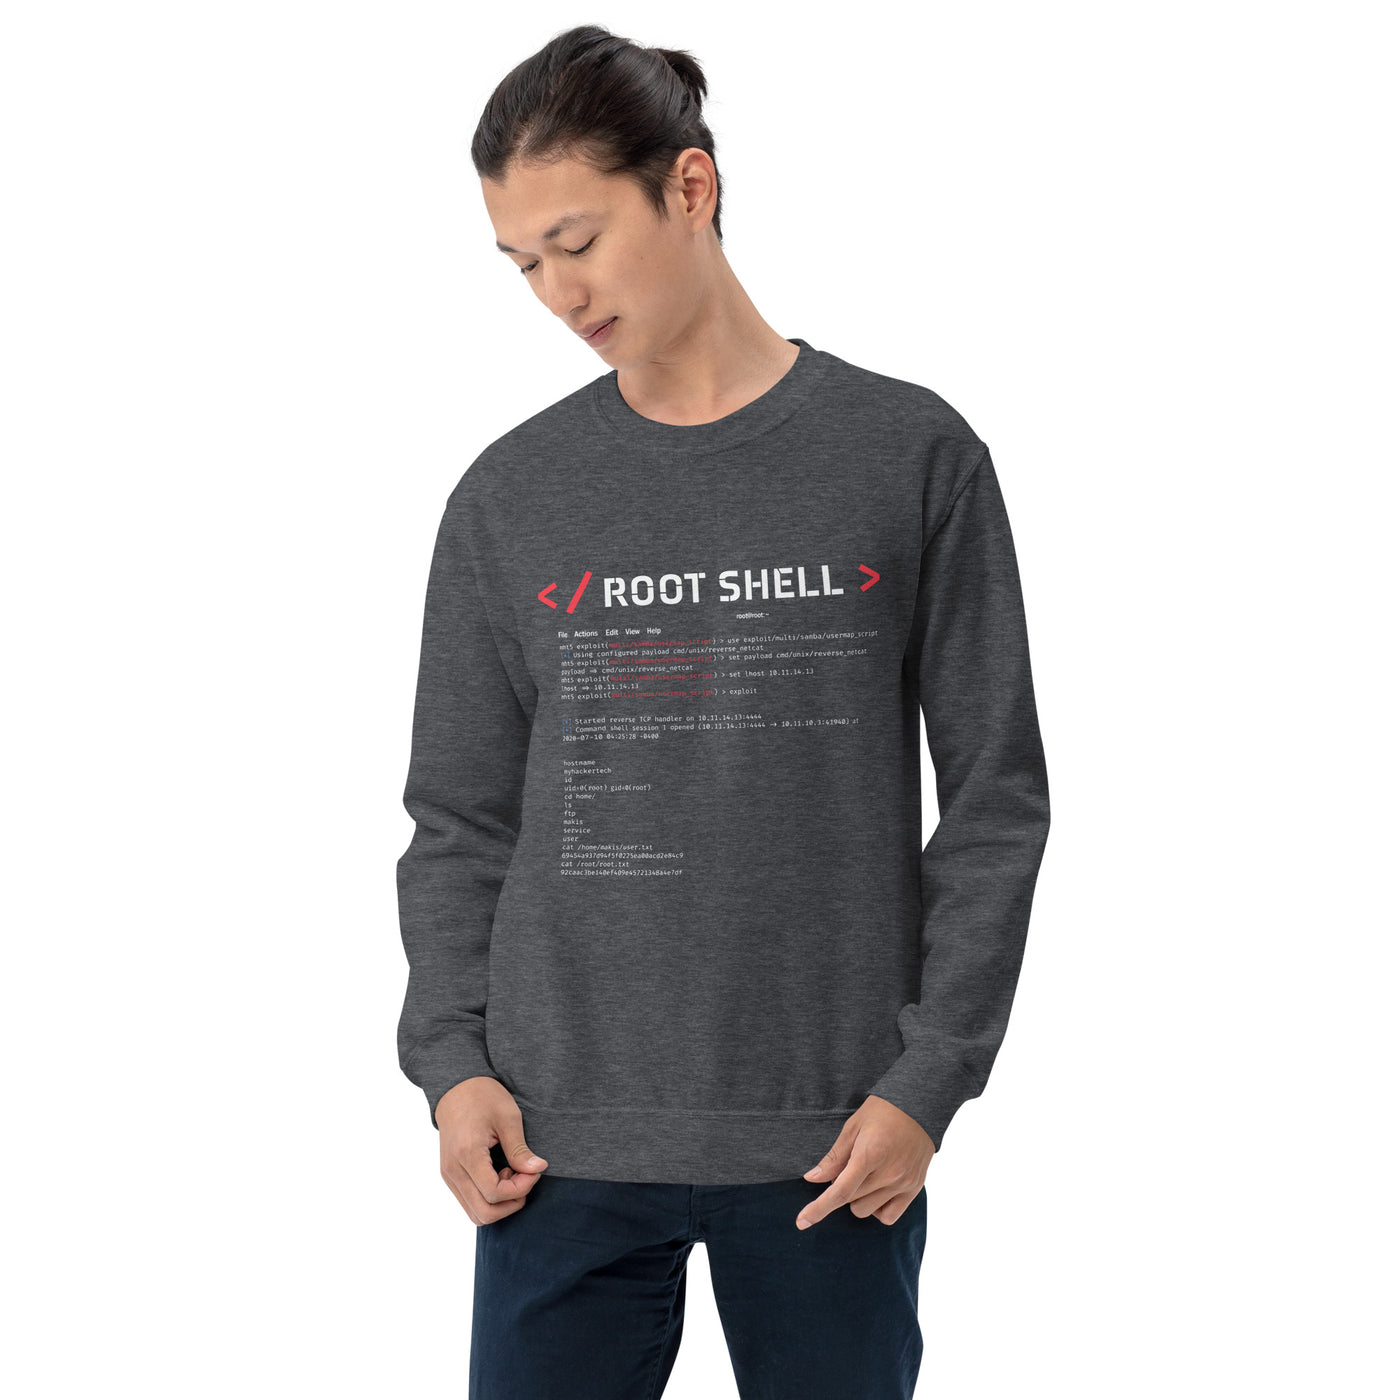 root shell - Unisex Sweatshirt